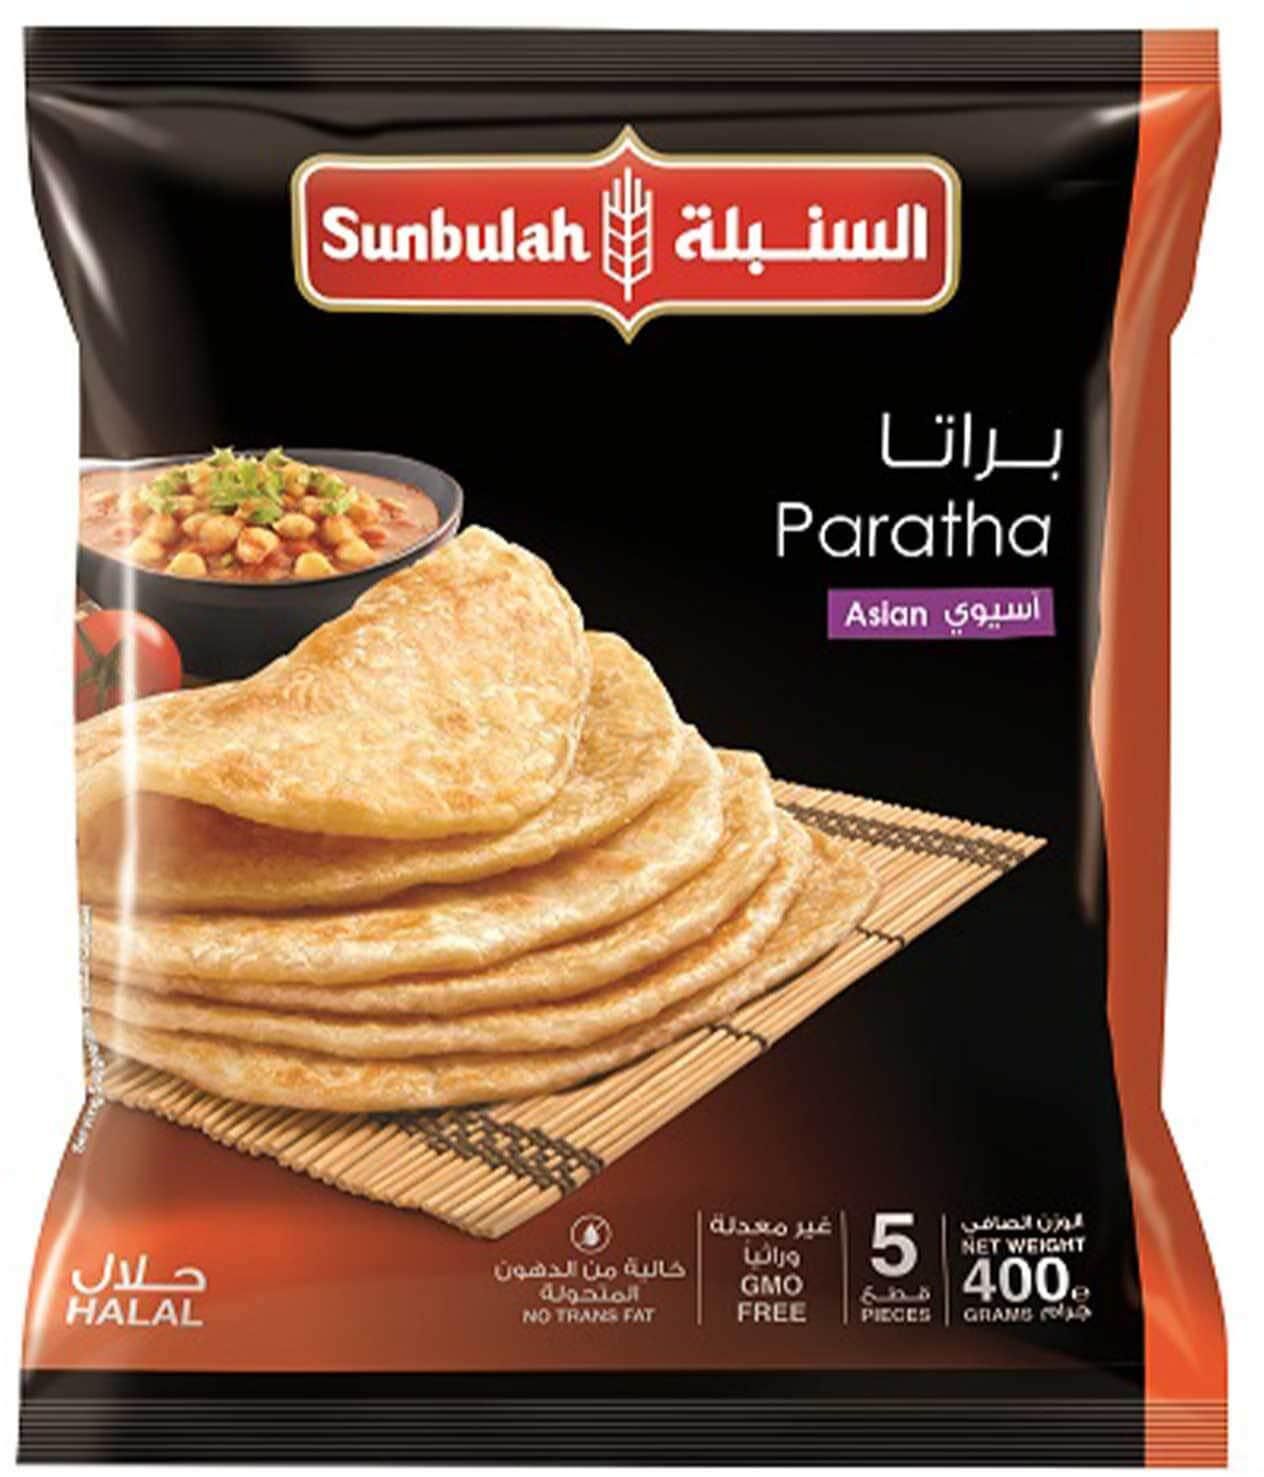 Sunbulah paratha asian taste bread 5 pieces - 400 g